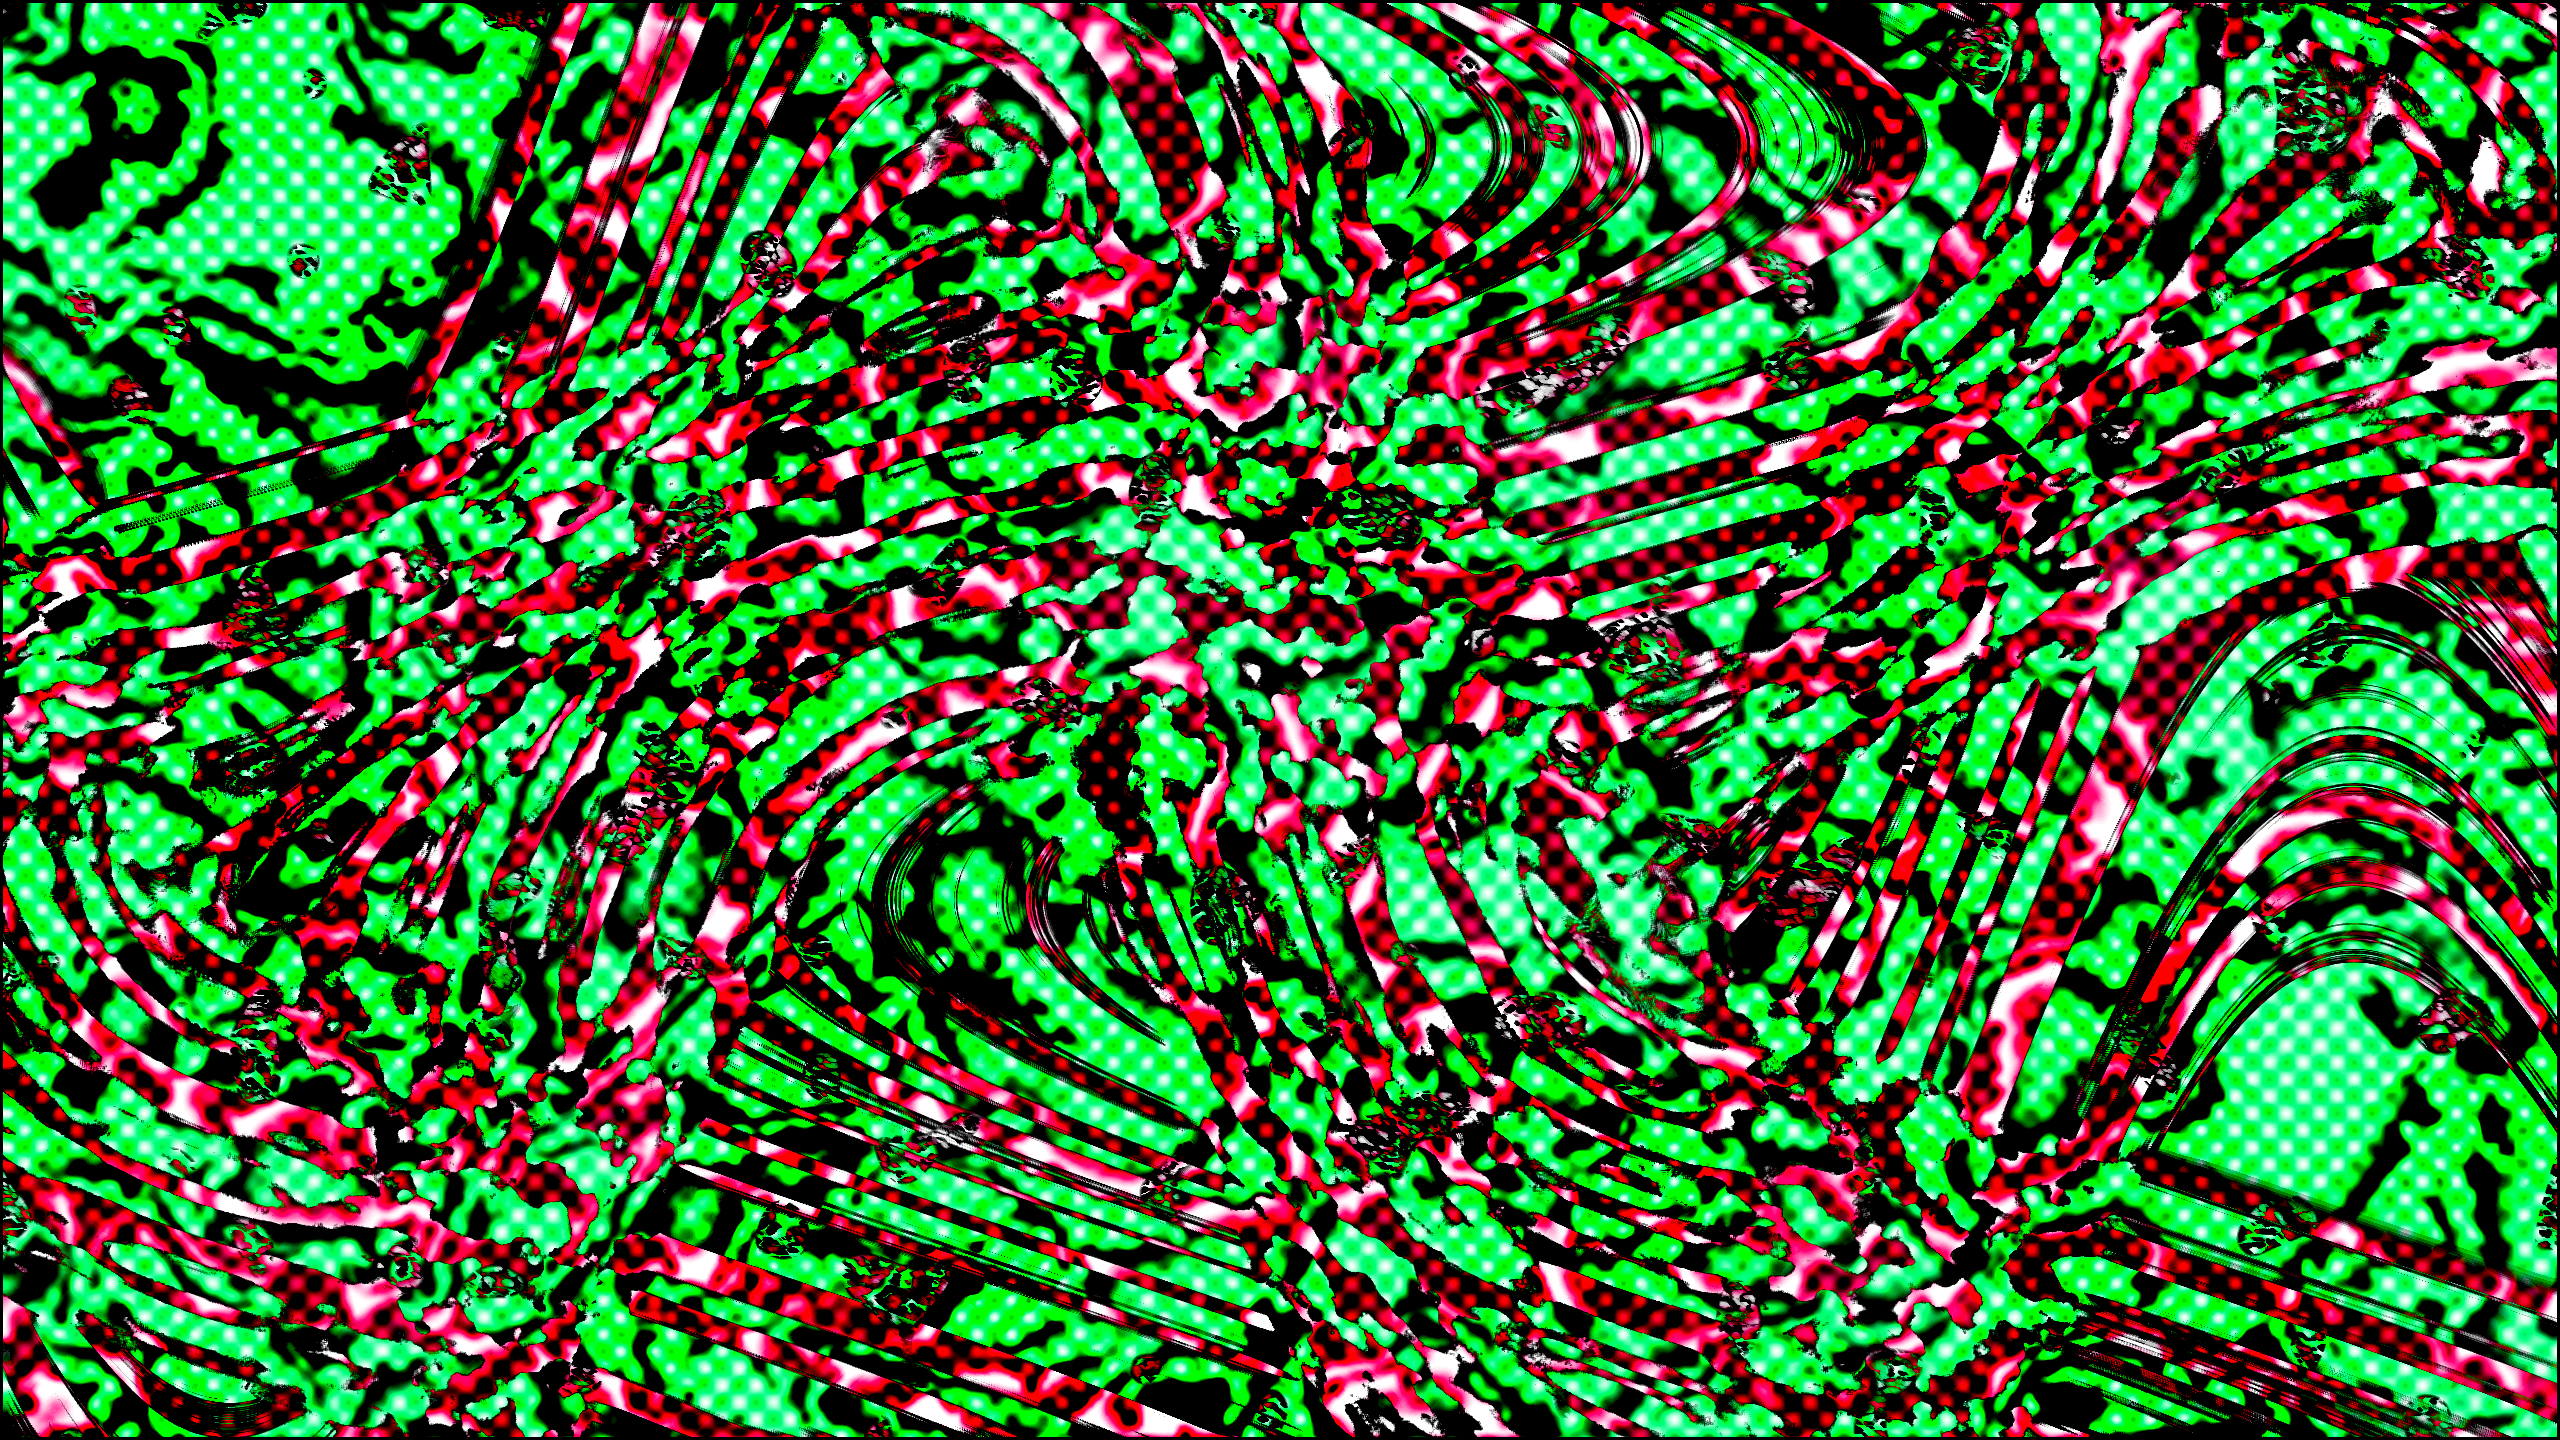 Abstract Digital Art Trippy Brightness Watermelons 2560x1440